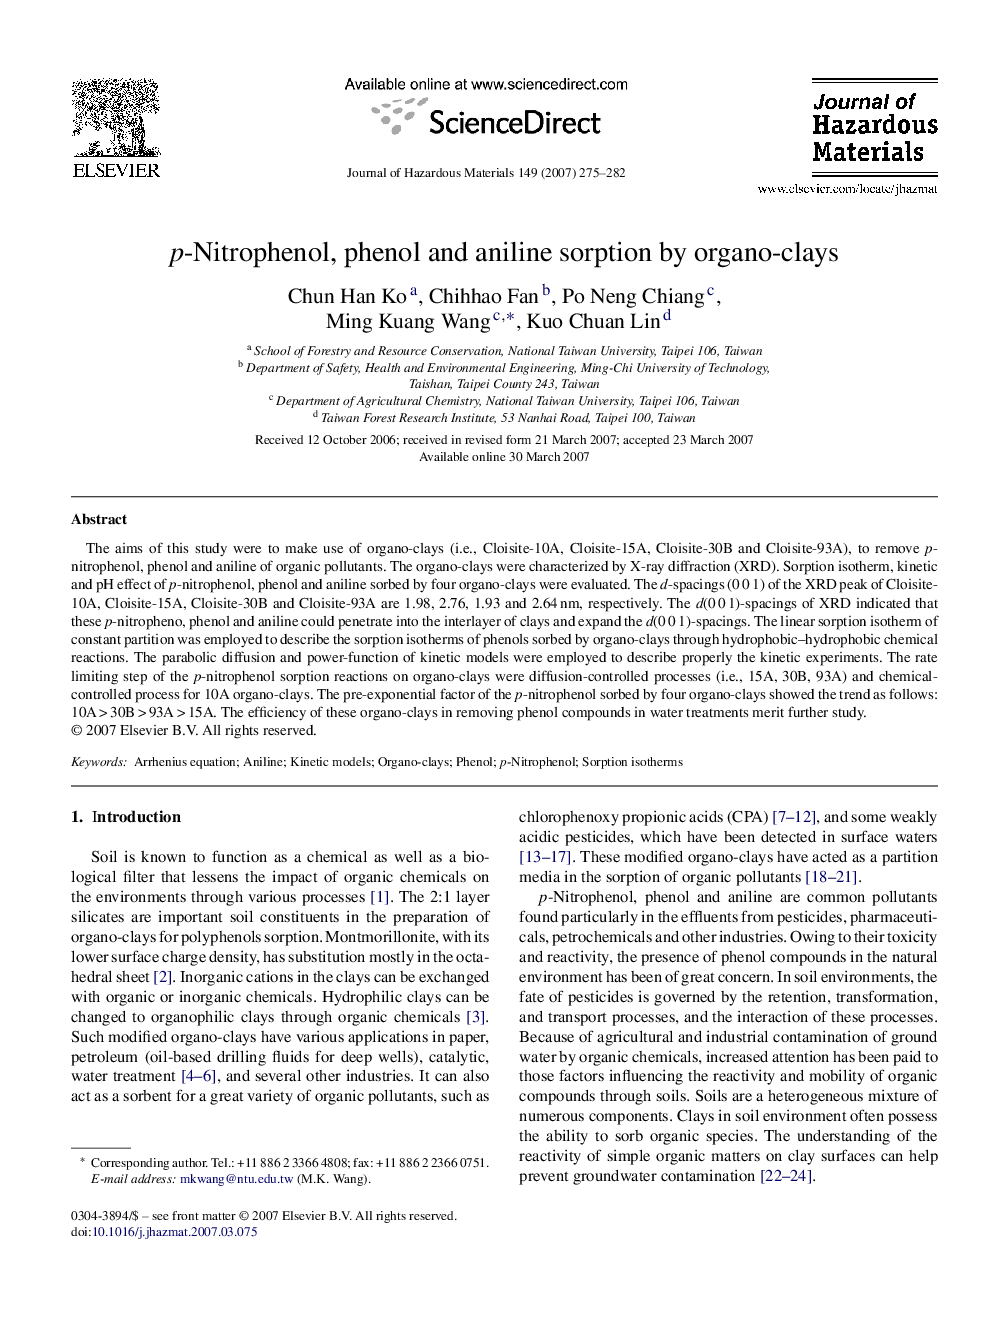 p-Nitrophenol, phenol and aniline sorption by organo-clays